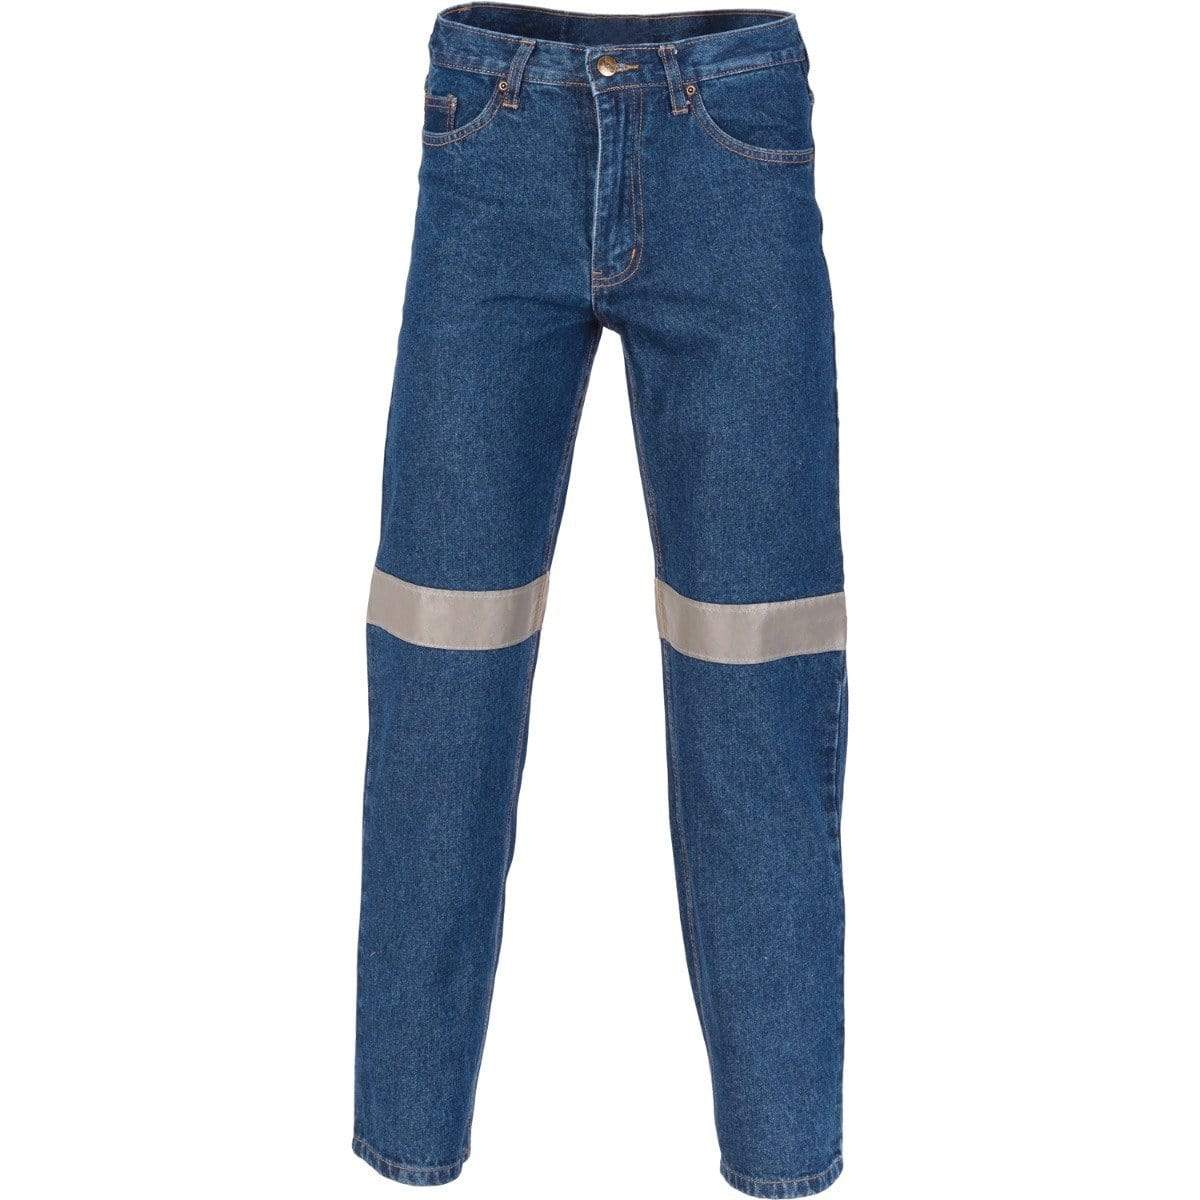 Dnc Workwear Denim Jeans With Csr Reflective Tape - 3327 Work Wear DNC Workwear Blue 72R 